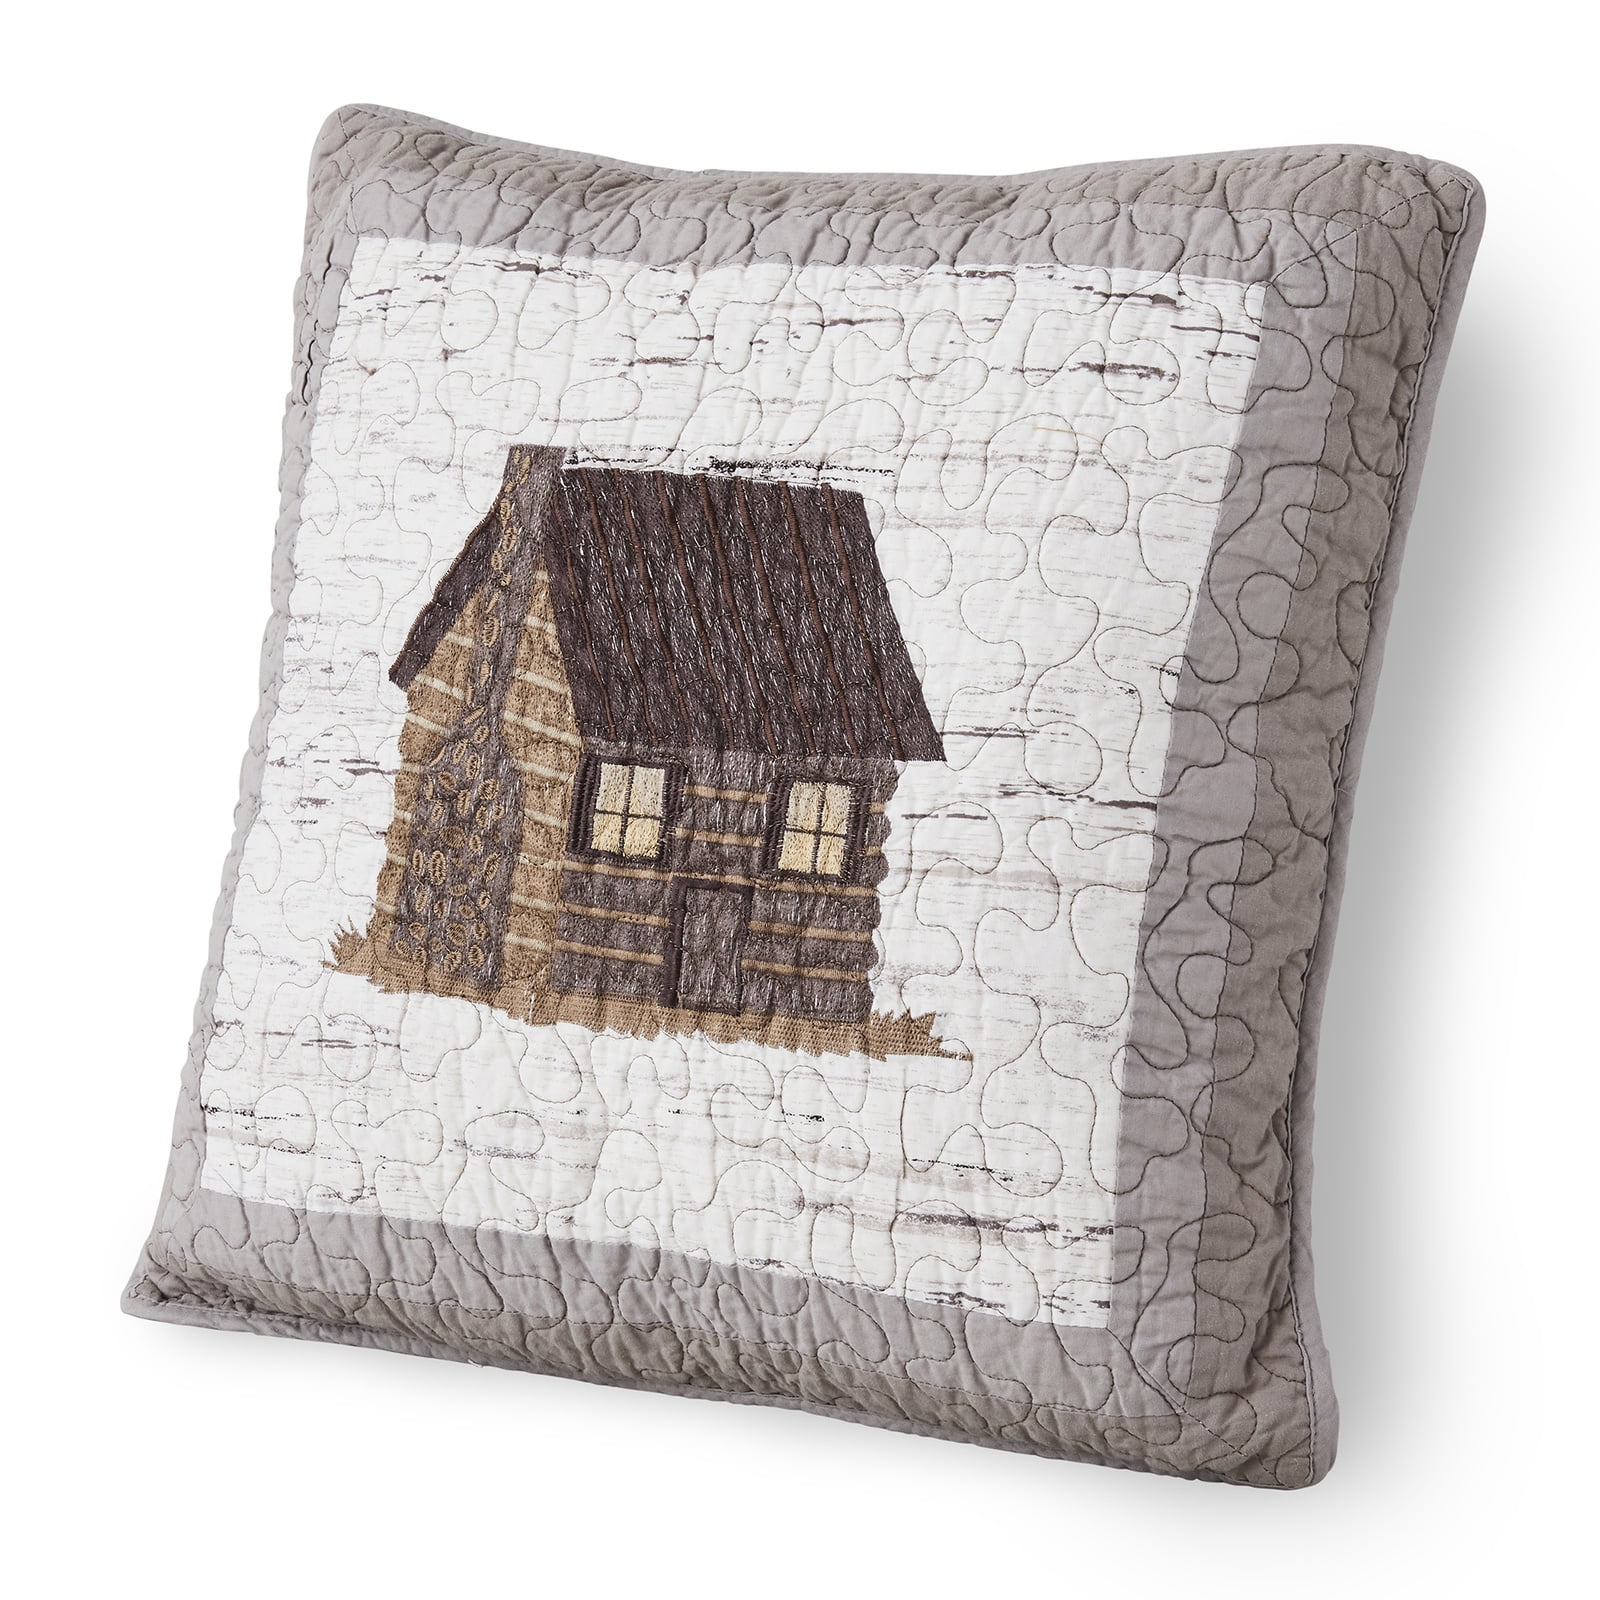 86101 18 X 18 In. Birch Forest Cabin Decorative Pillow, Multi Color